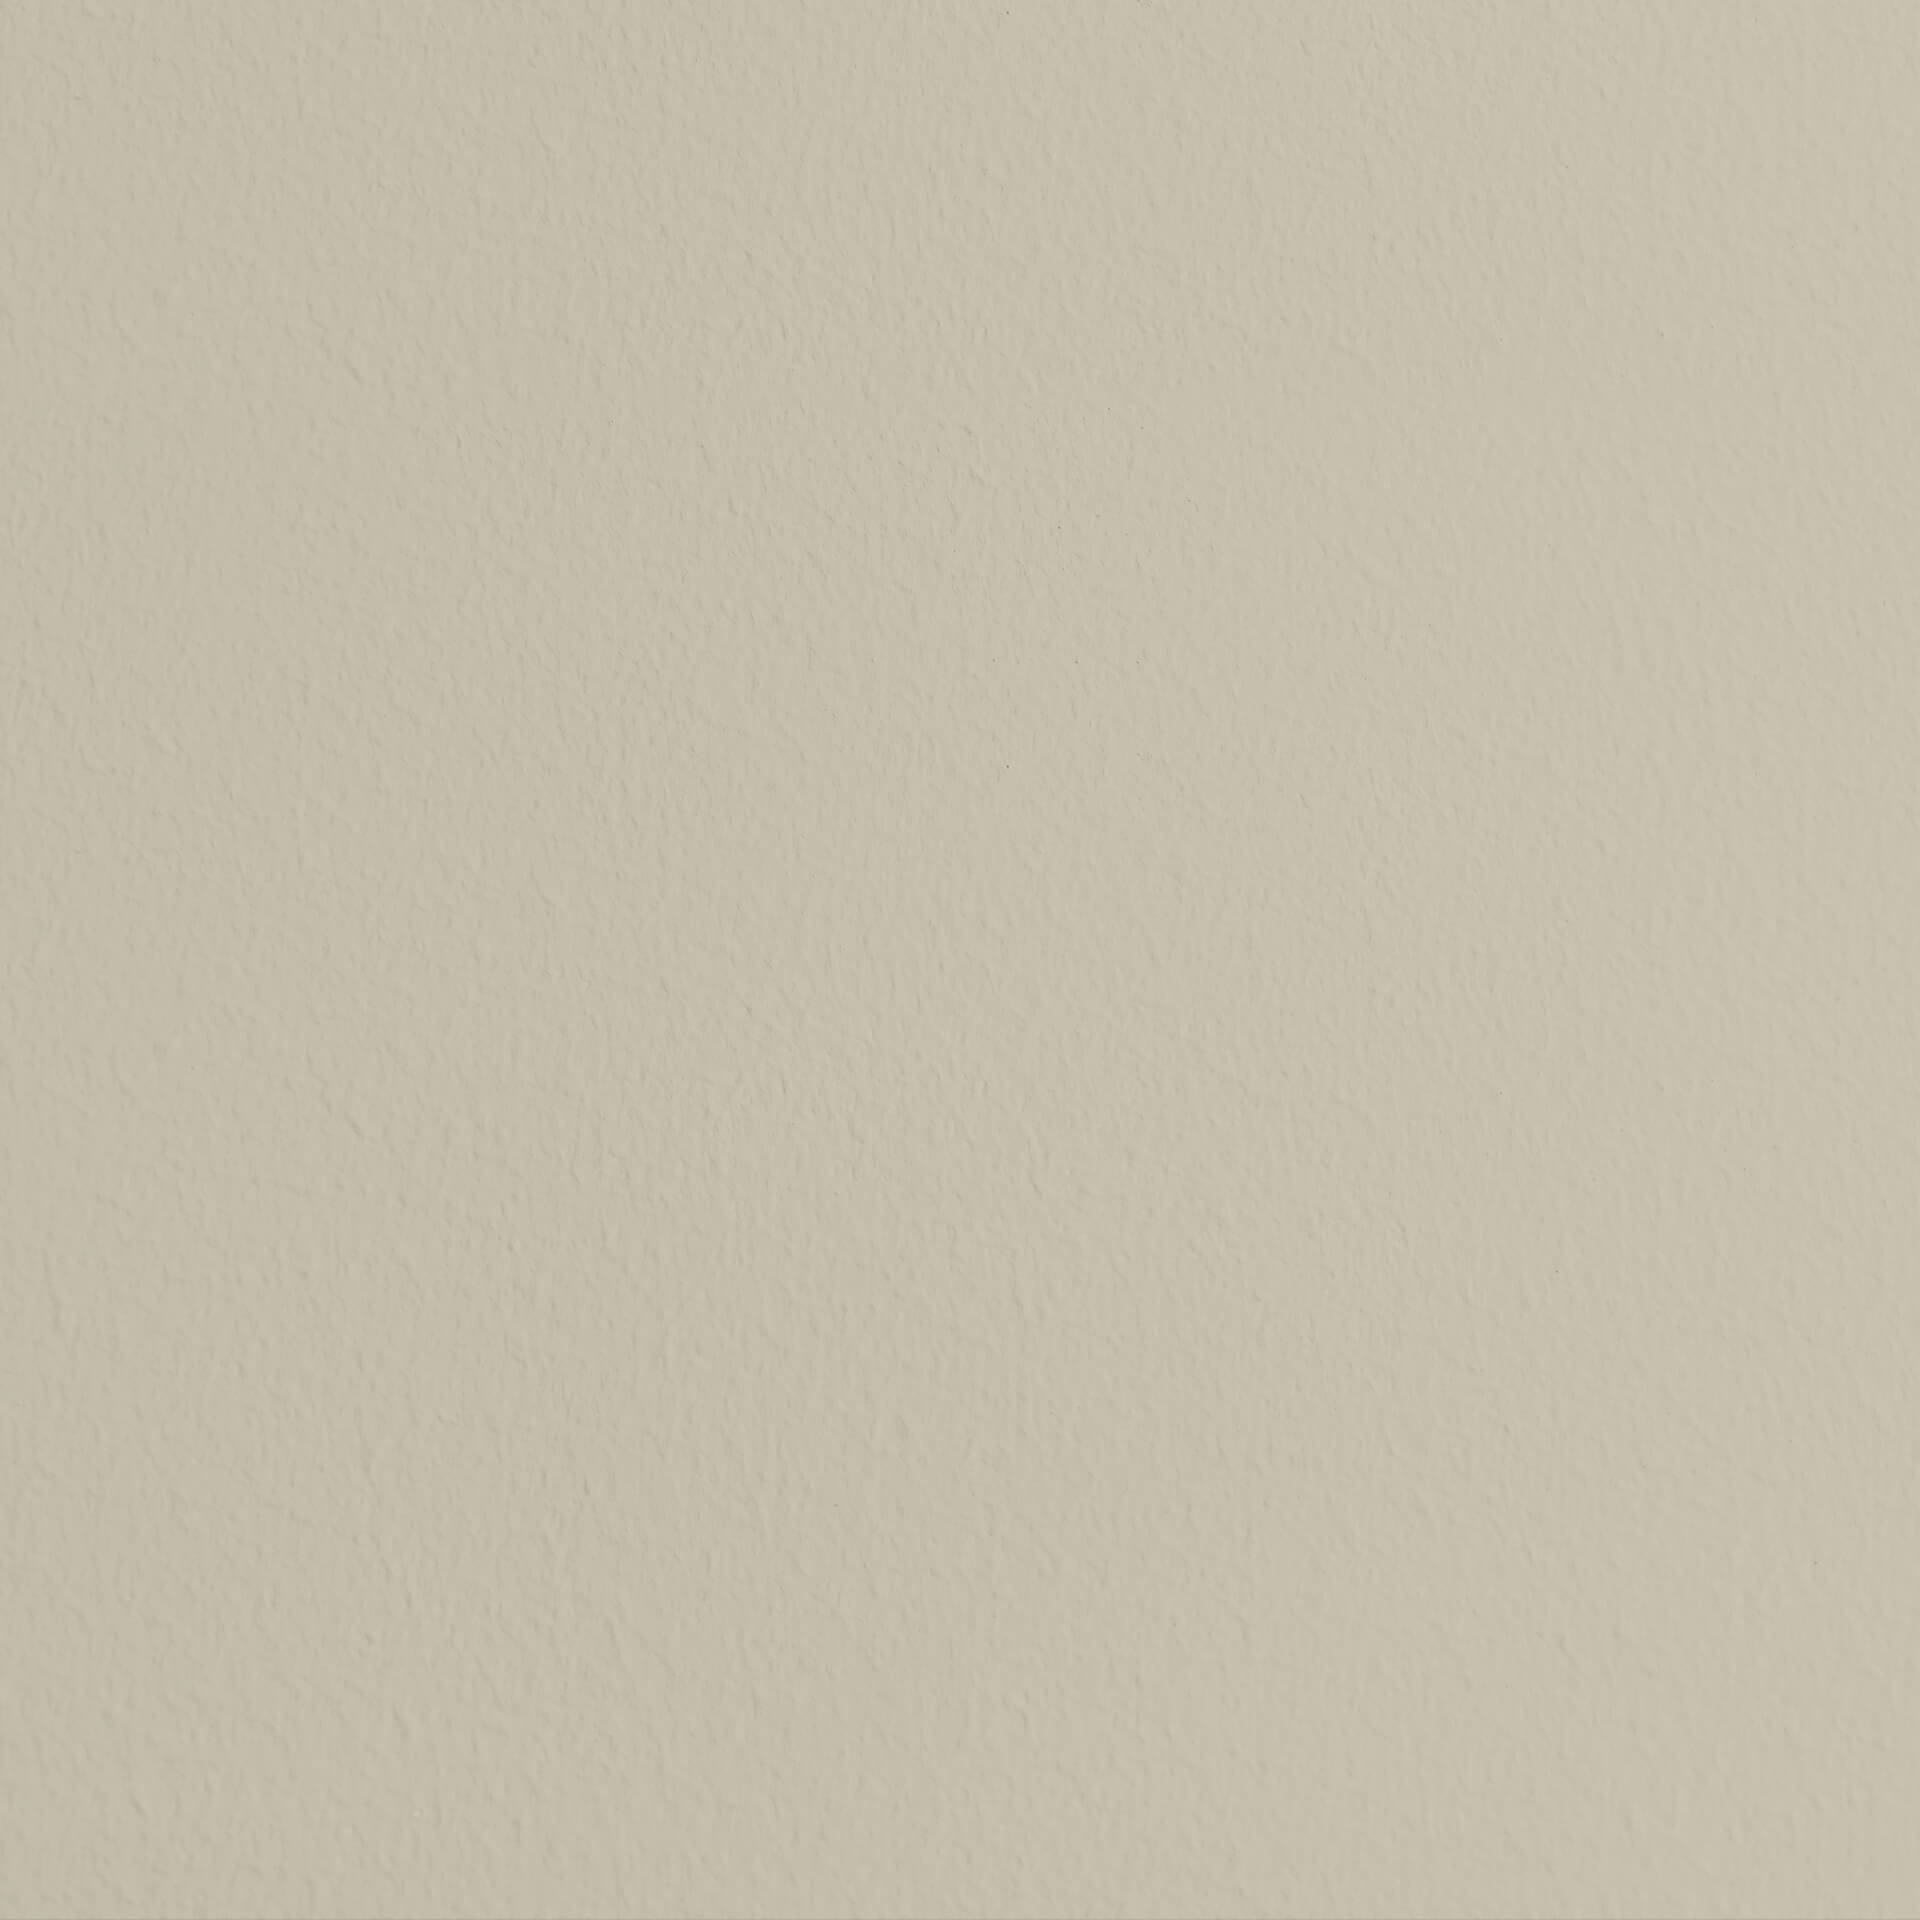 Mylands Flanders Grey No. 110 - Marble Matt Emulsion / Wandfarbe, 1L